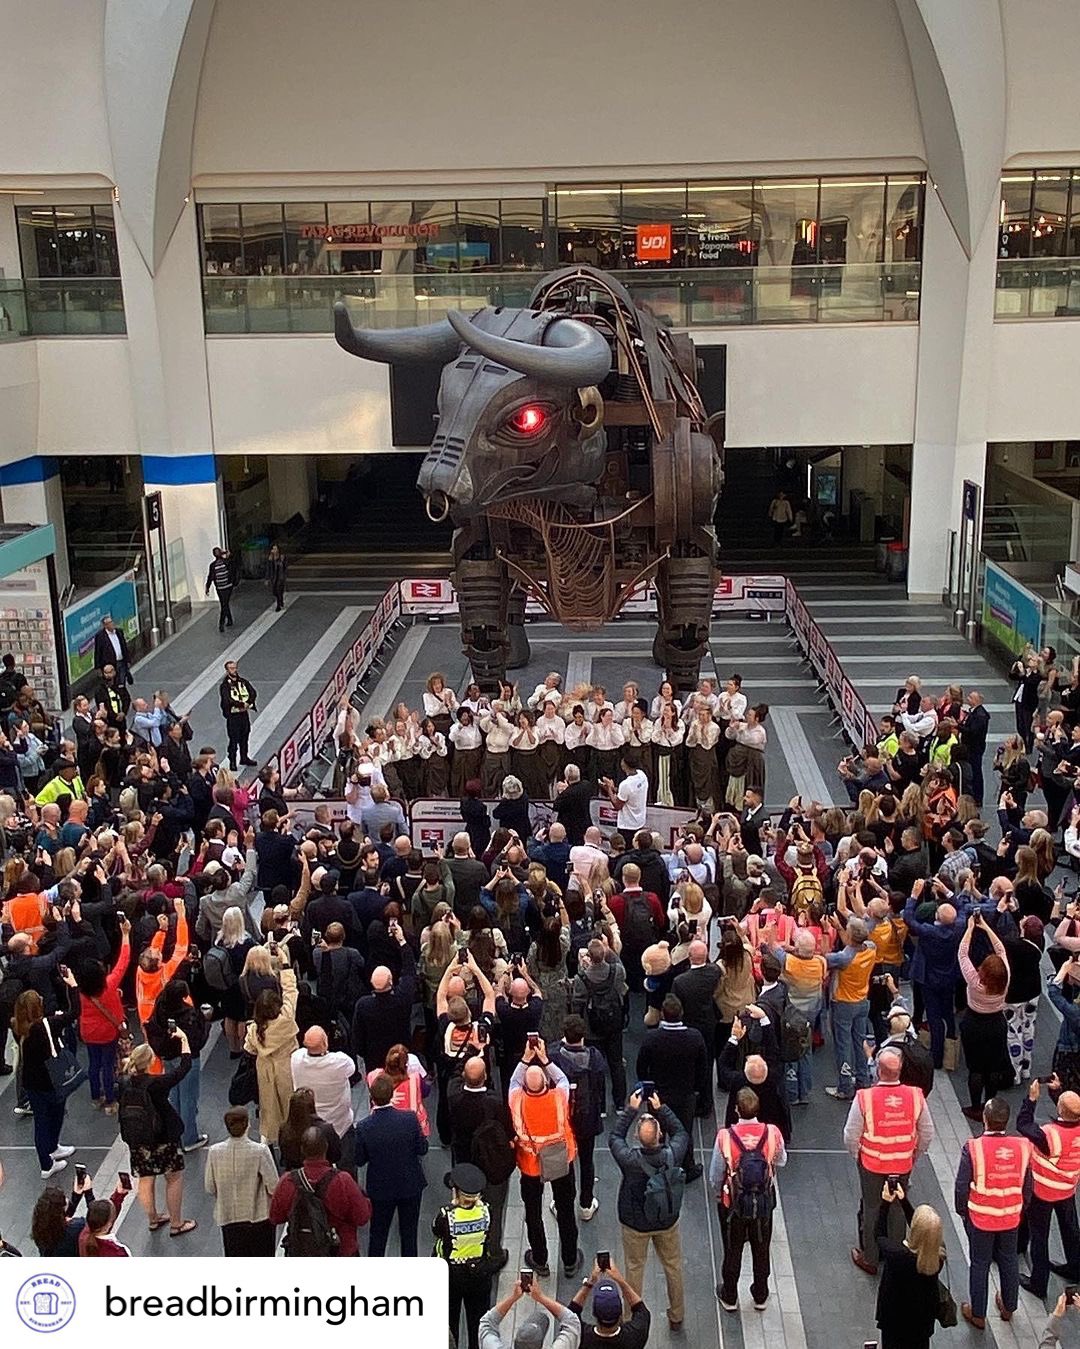 Ozzy yhe Bull unveiled in Birmingham photo